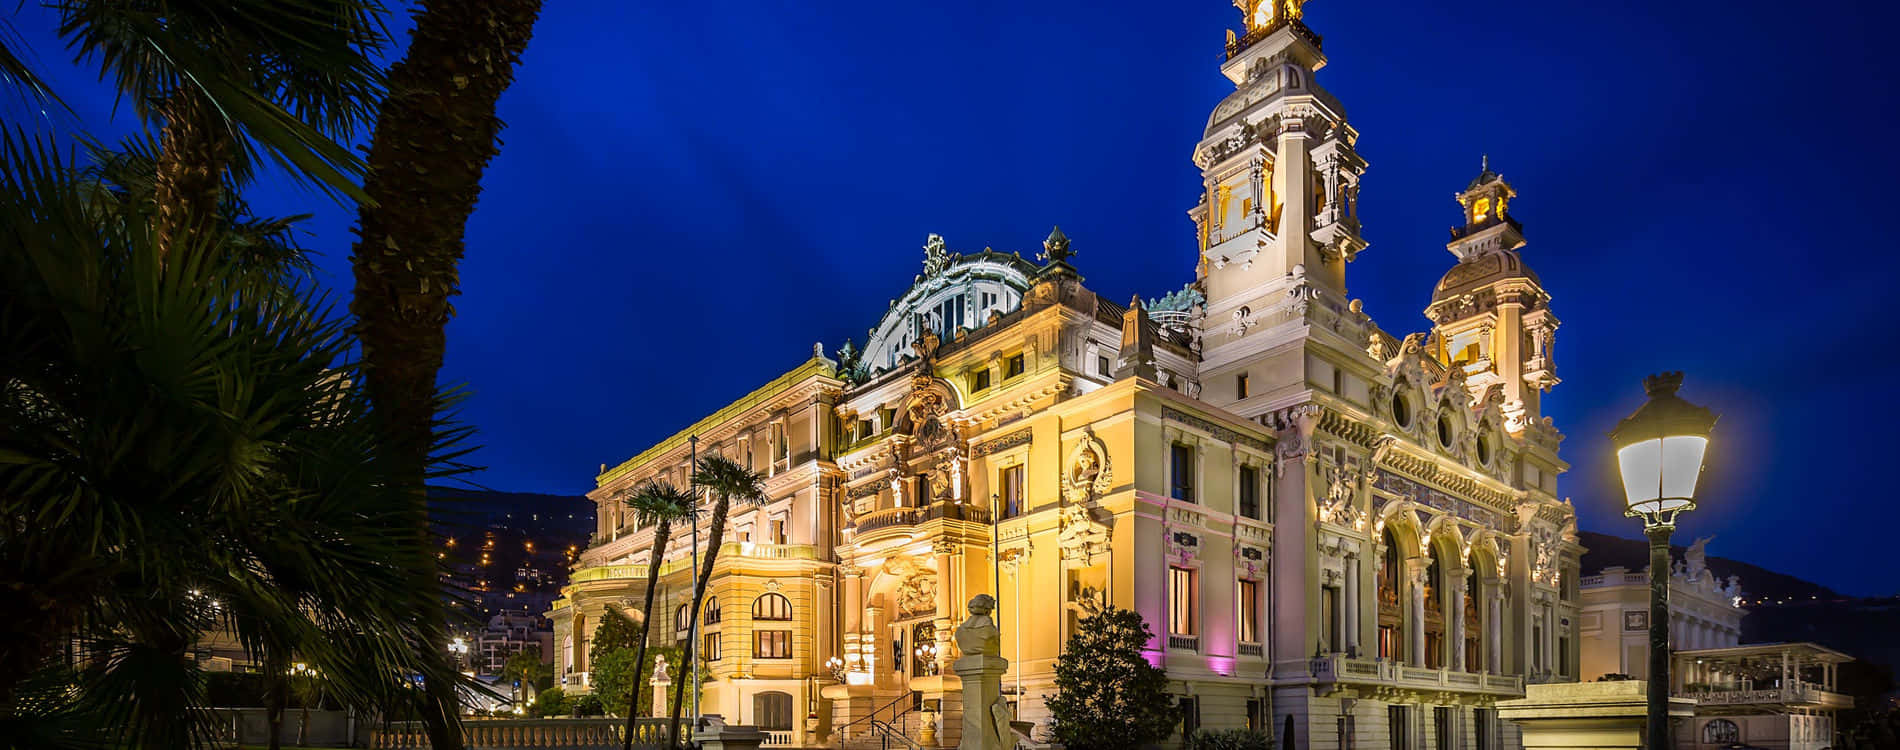 Casino De Monte Carlo Night Sky Wallpaper